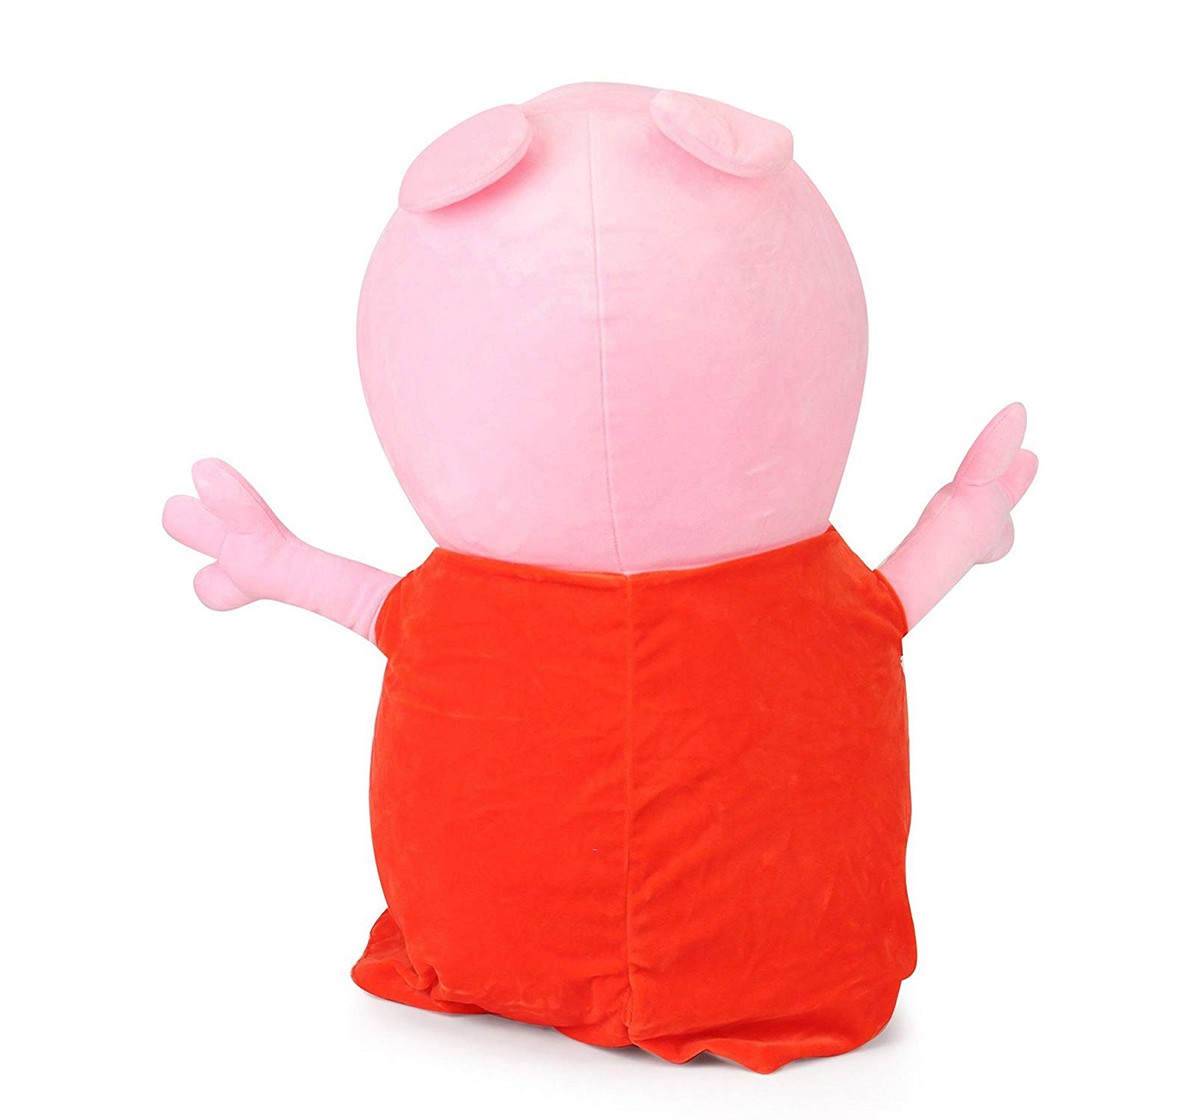 Peppa George Pig  Multi Color 46 Cm Soft Toy for Kids age 0M+ (Orange)